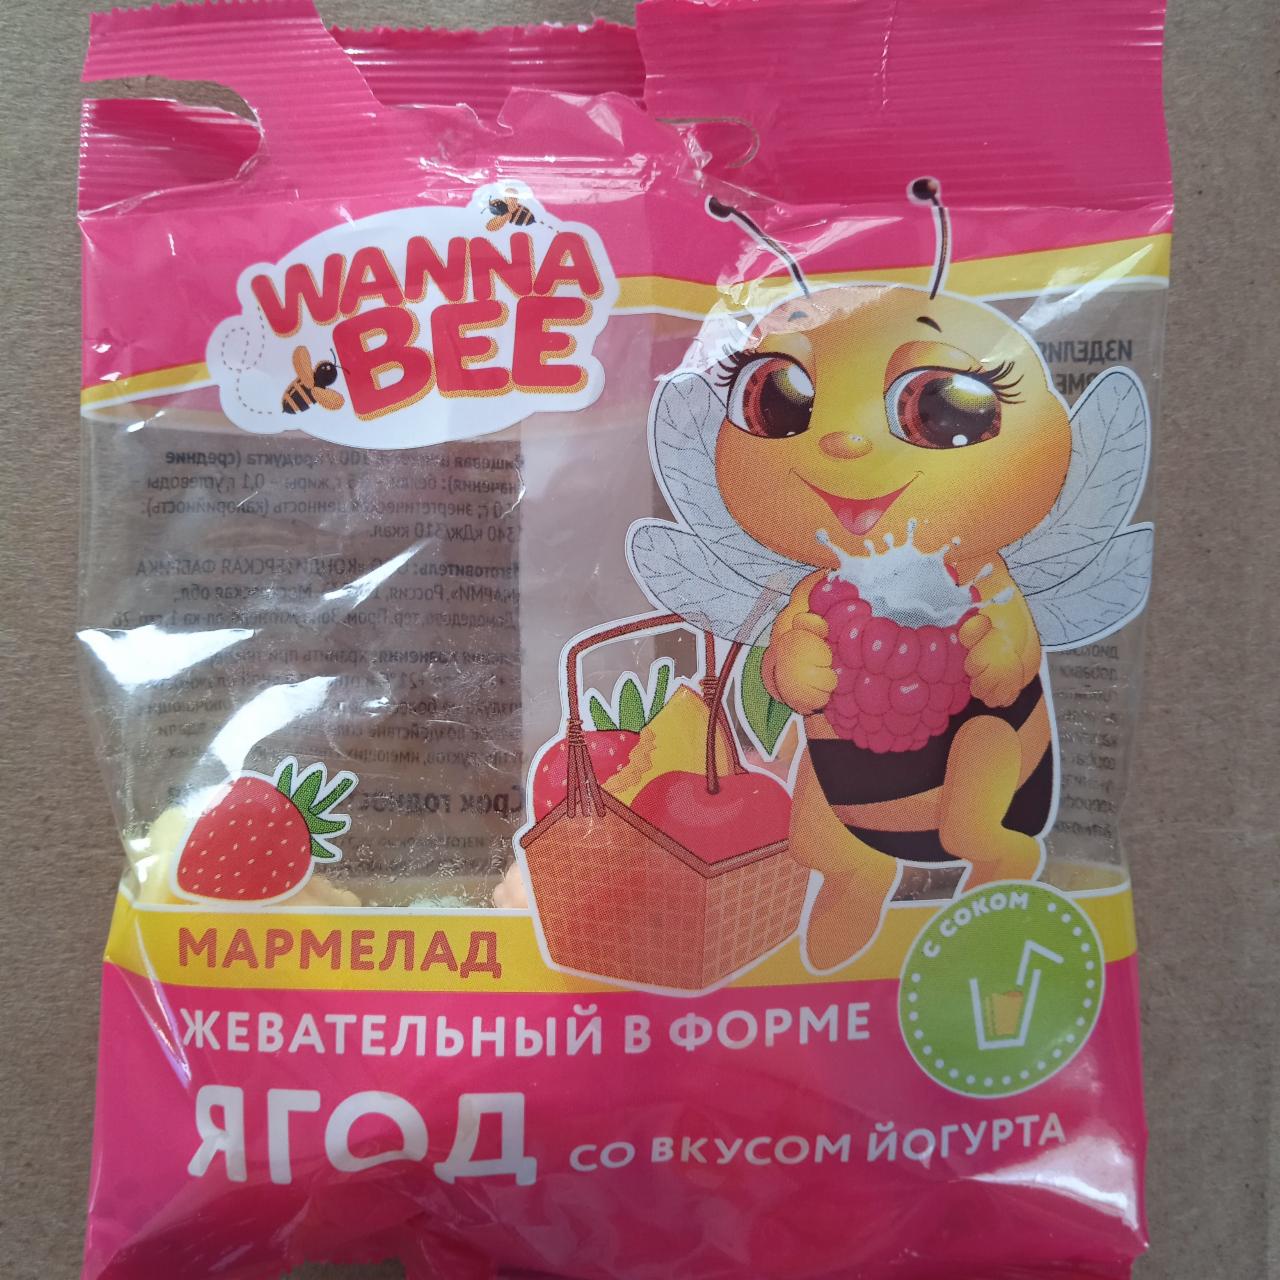 Фото - Мармелад жевательный в форме ягод со вкусом йогурта Wanna Bee